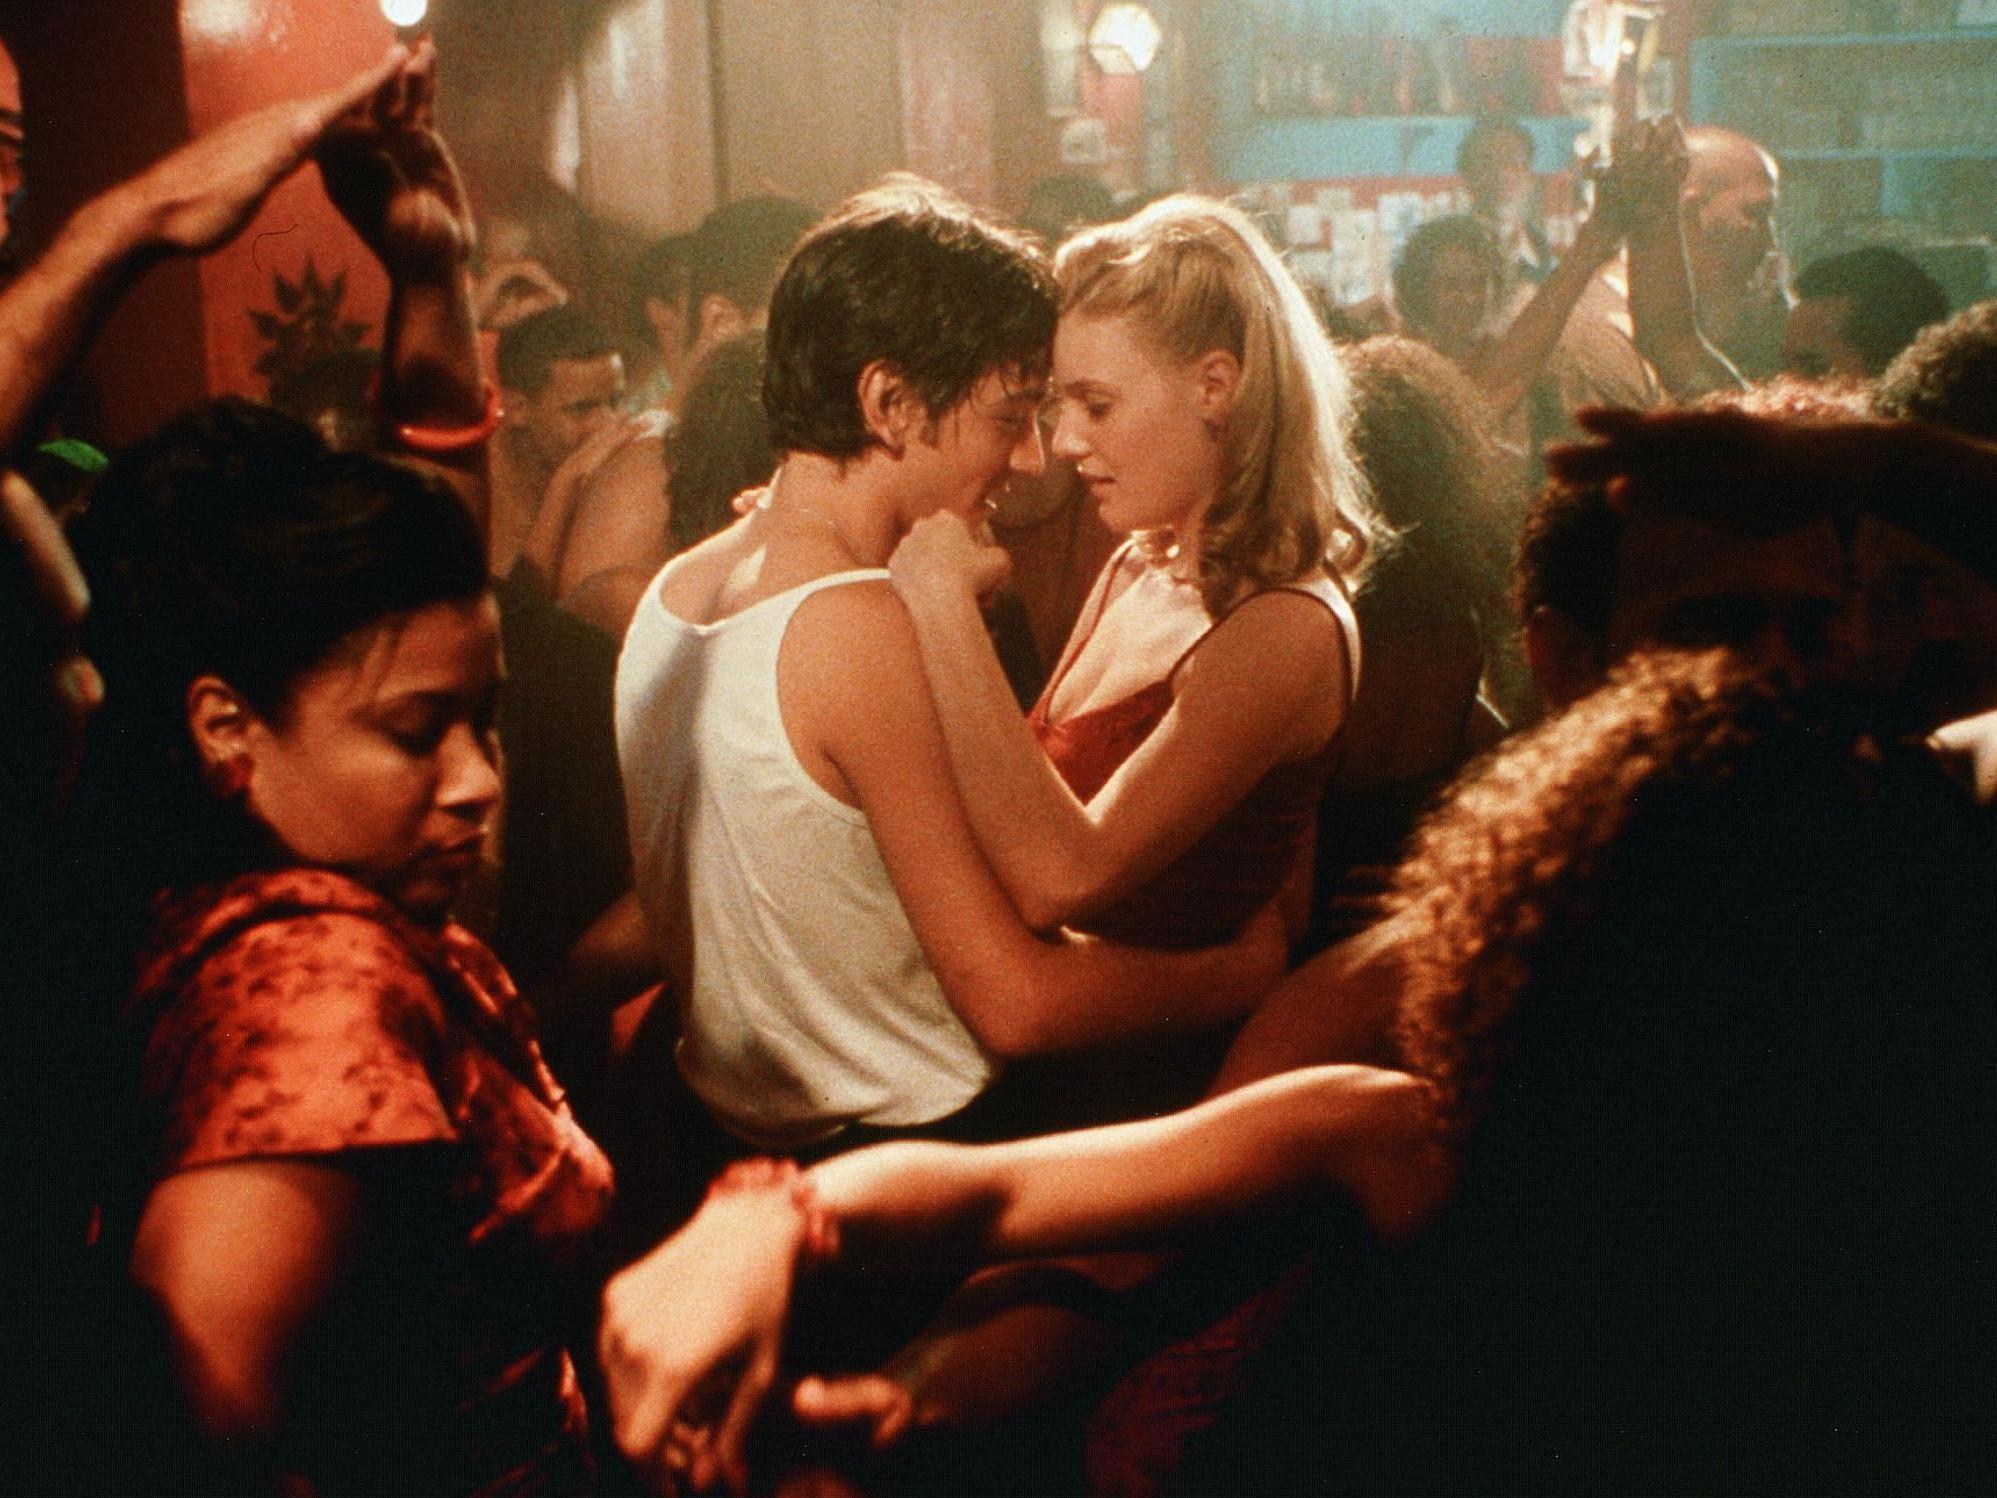 Diego Luna and Romola Garai in Dirty Dancing 2: Havana Nights